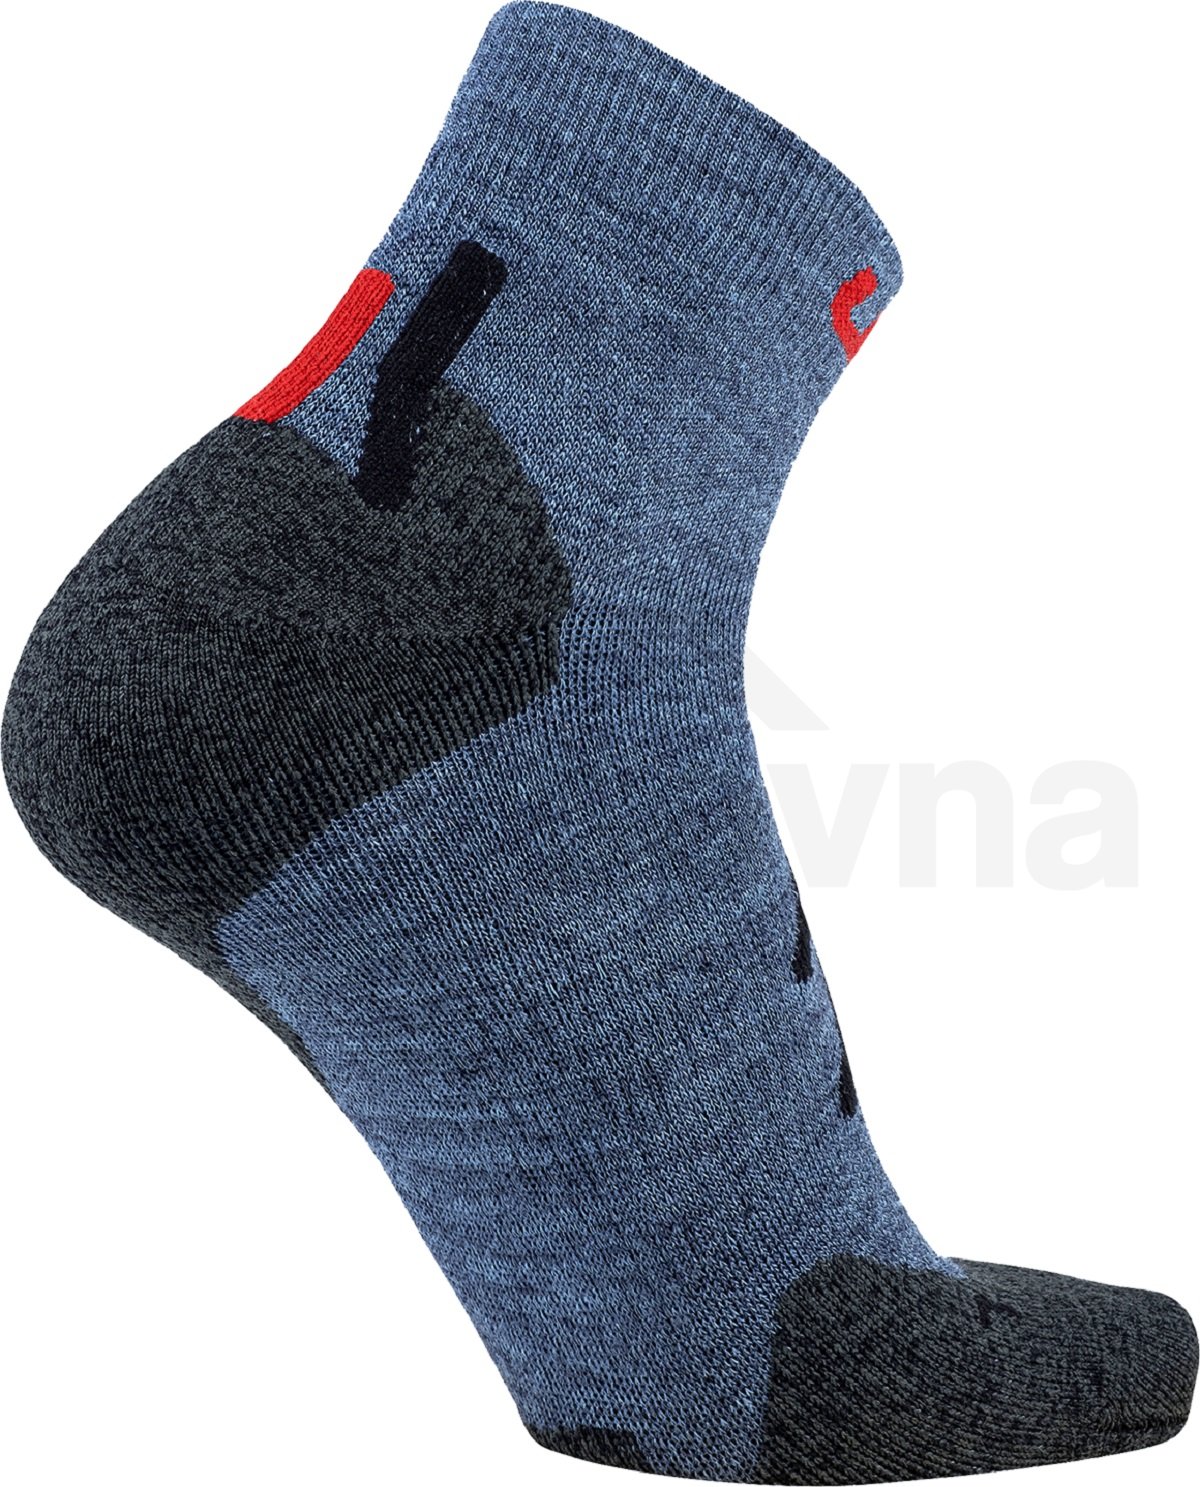 Ponožky UYN Trekking Approach Merino Low Cut Socks M - modrá/šedá/červená